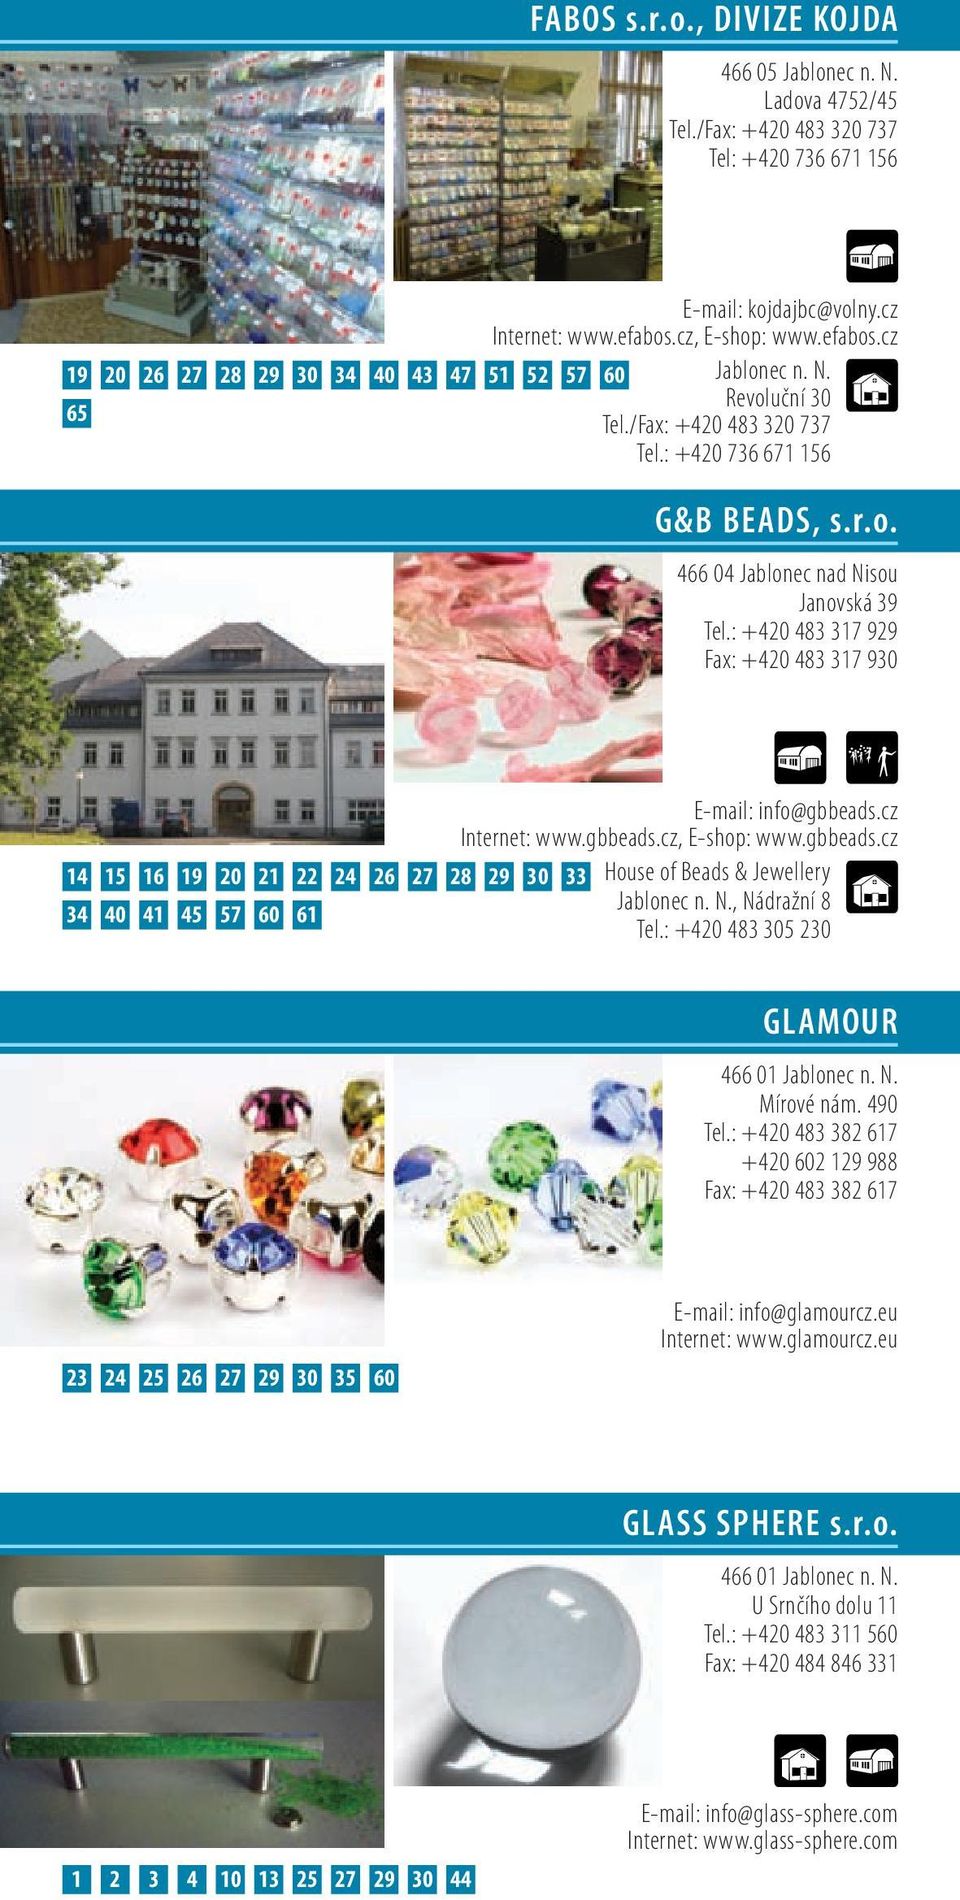 : +420 483 317 929 Fax: +420 483 317 930 E-mail: info@gbbeads.cz Internet: www.gbbeads.cz, E-shop: www.gbbeads.cz 14 15 16 19 20 21 22 24 26 27 28 29 30 33 House of Beads & Jewellery Jablonec n. N.